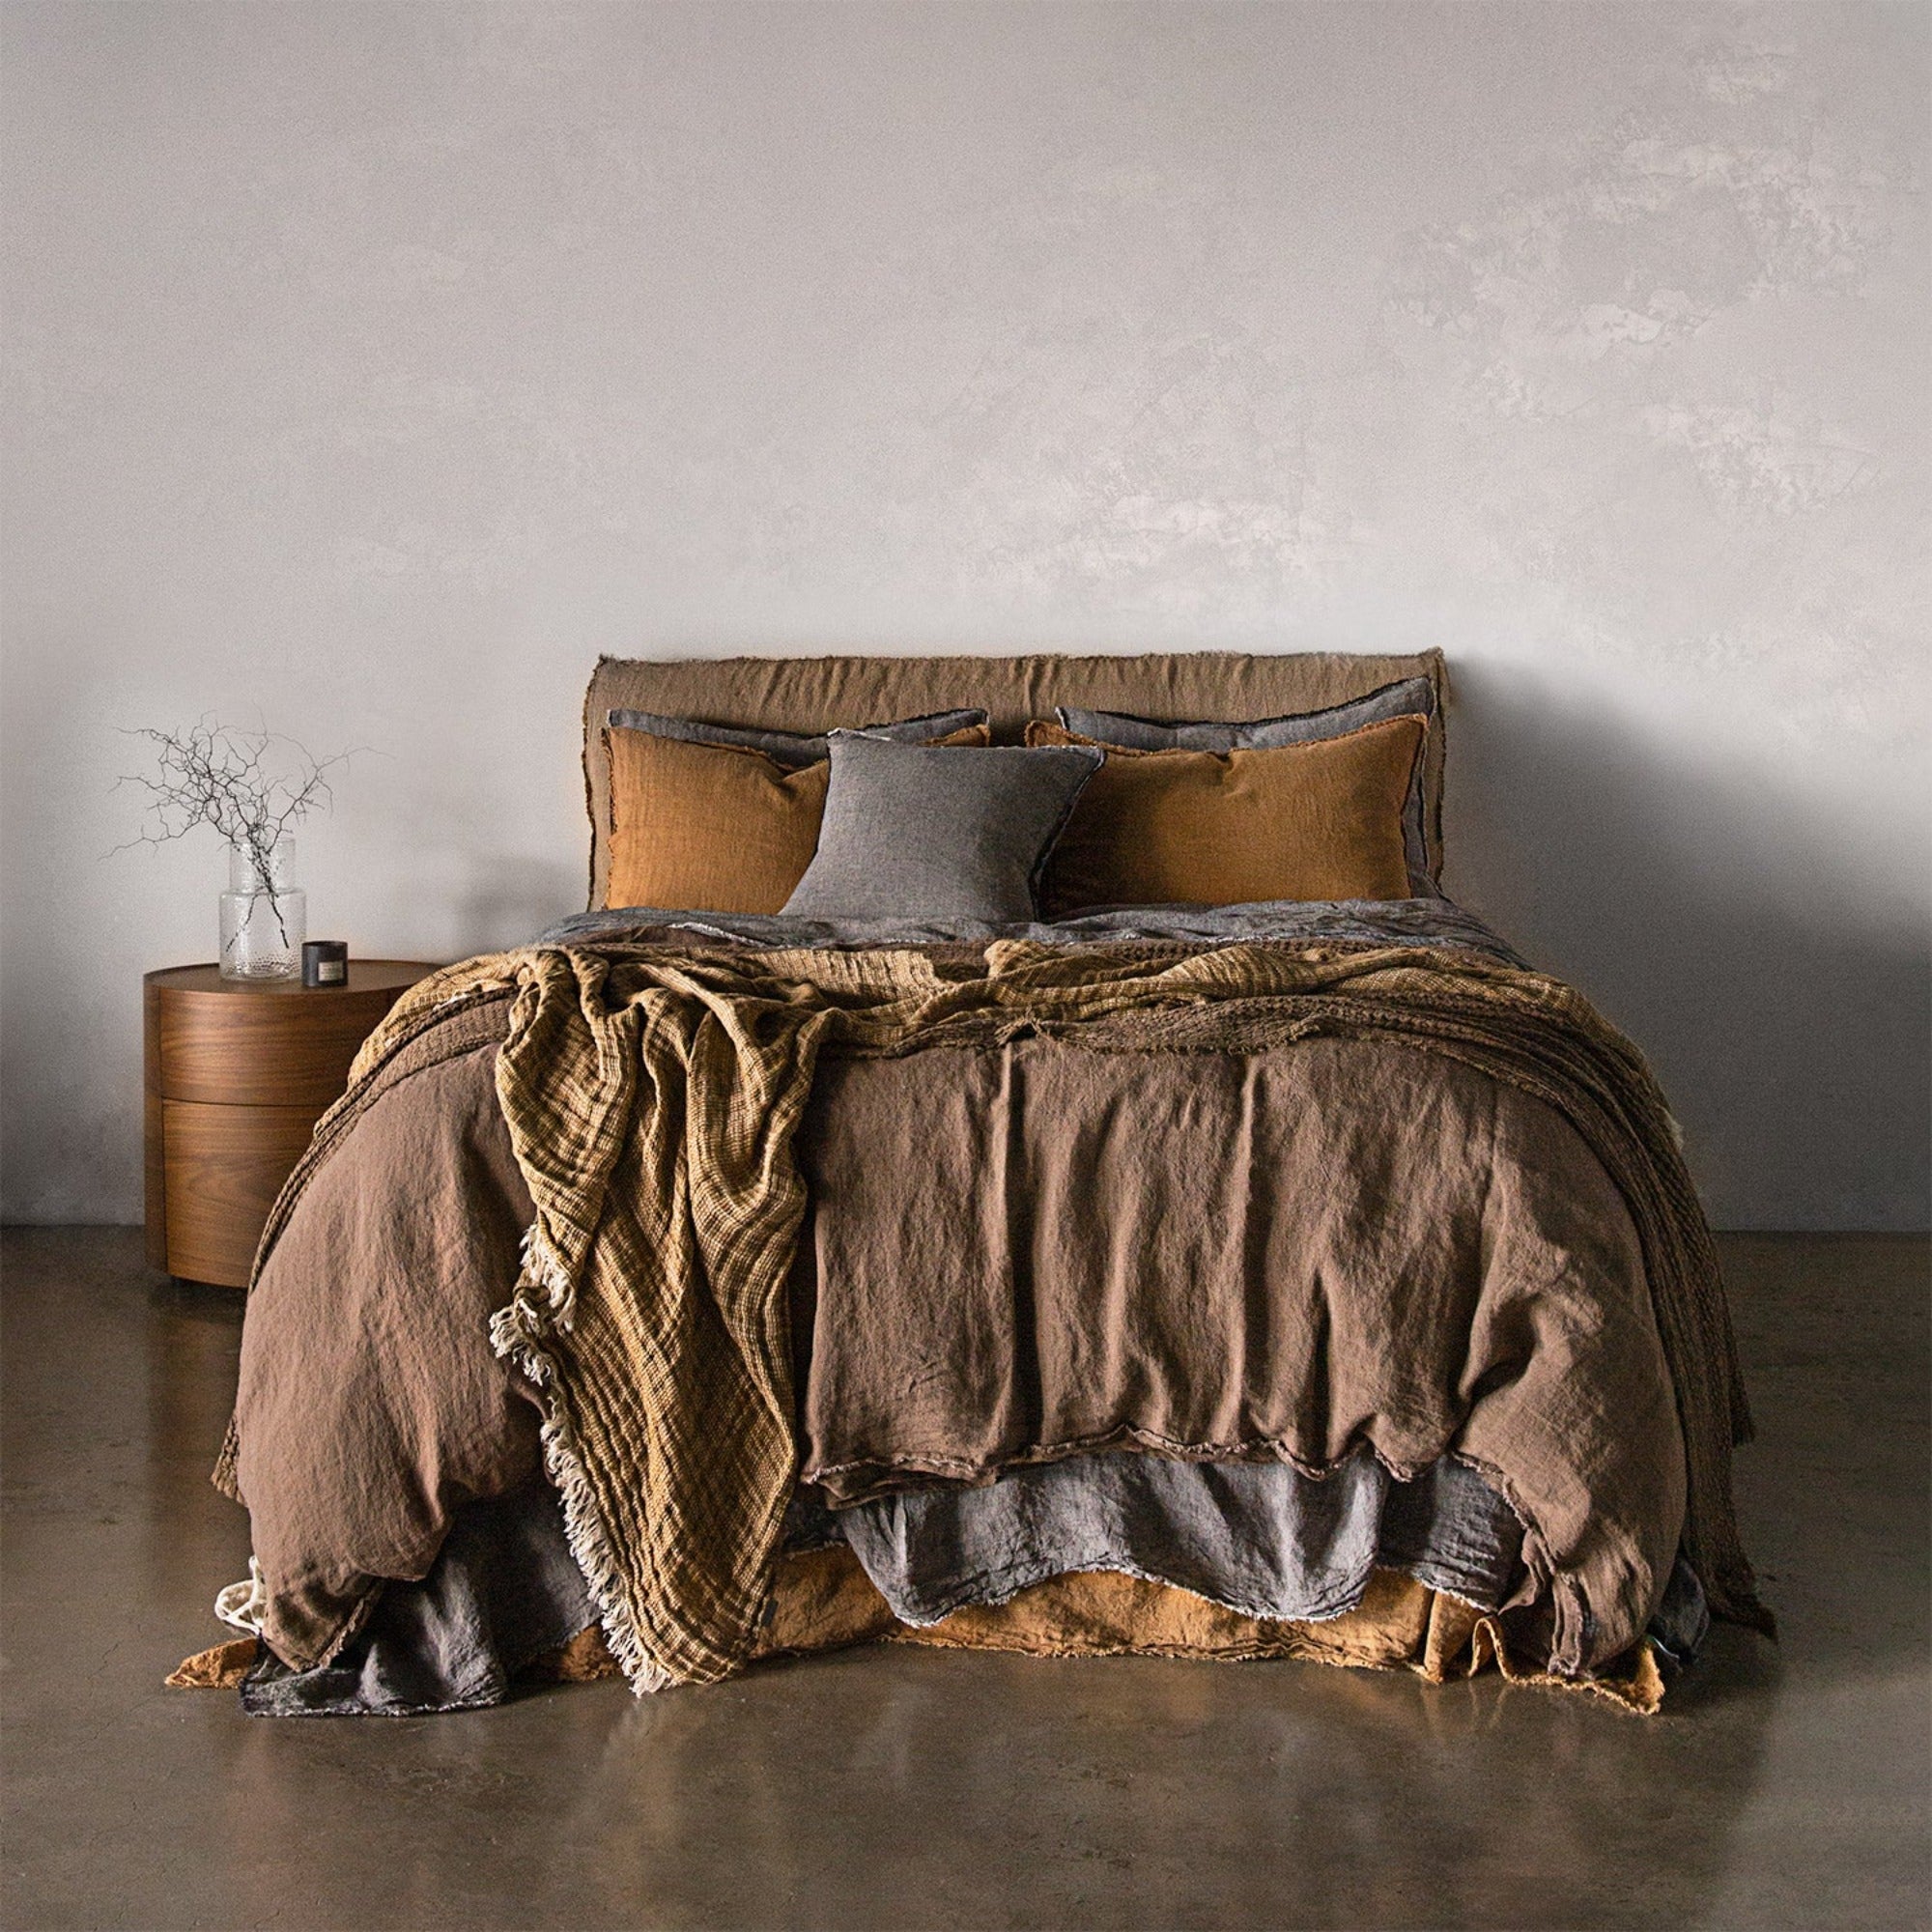 Linen Pillow Cover | Muted Black | Hale Mercantile Co.